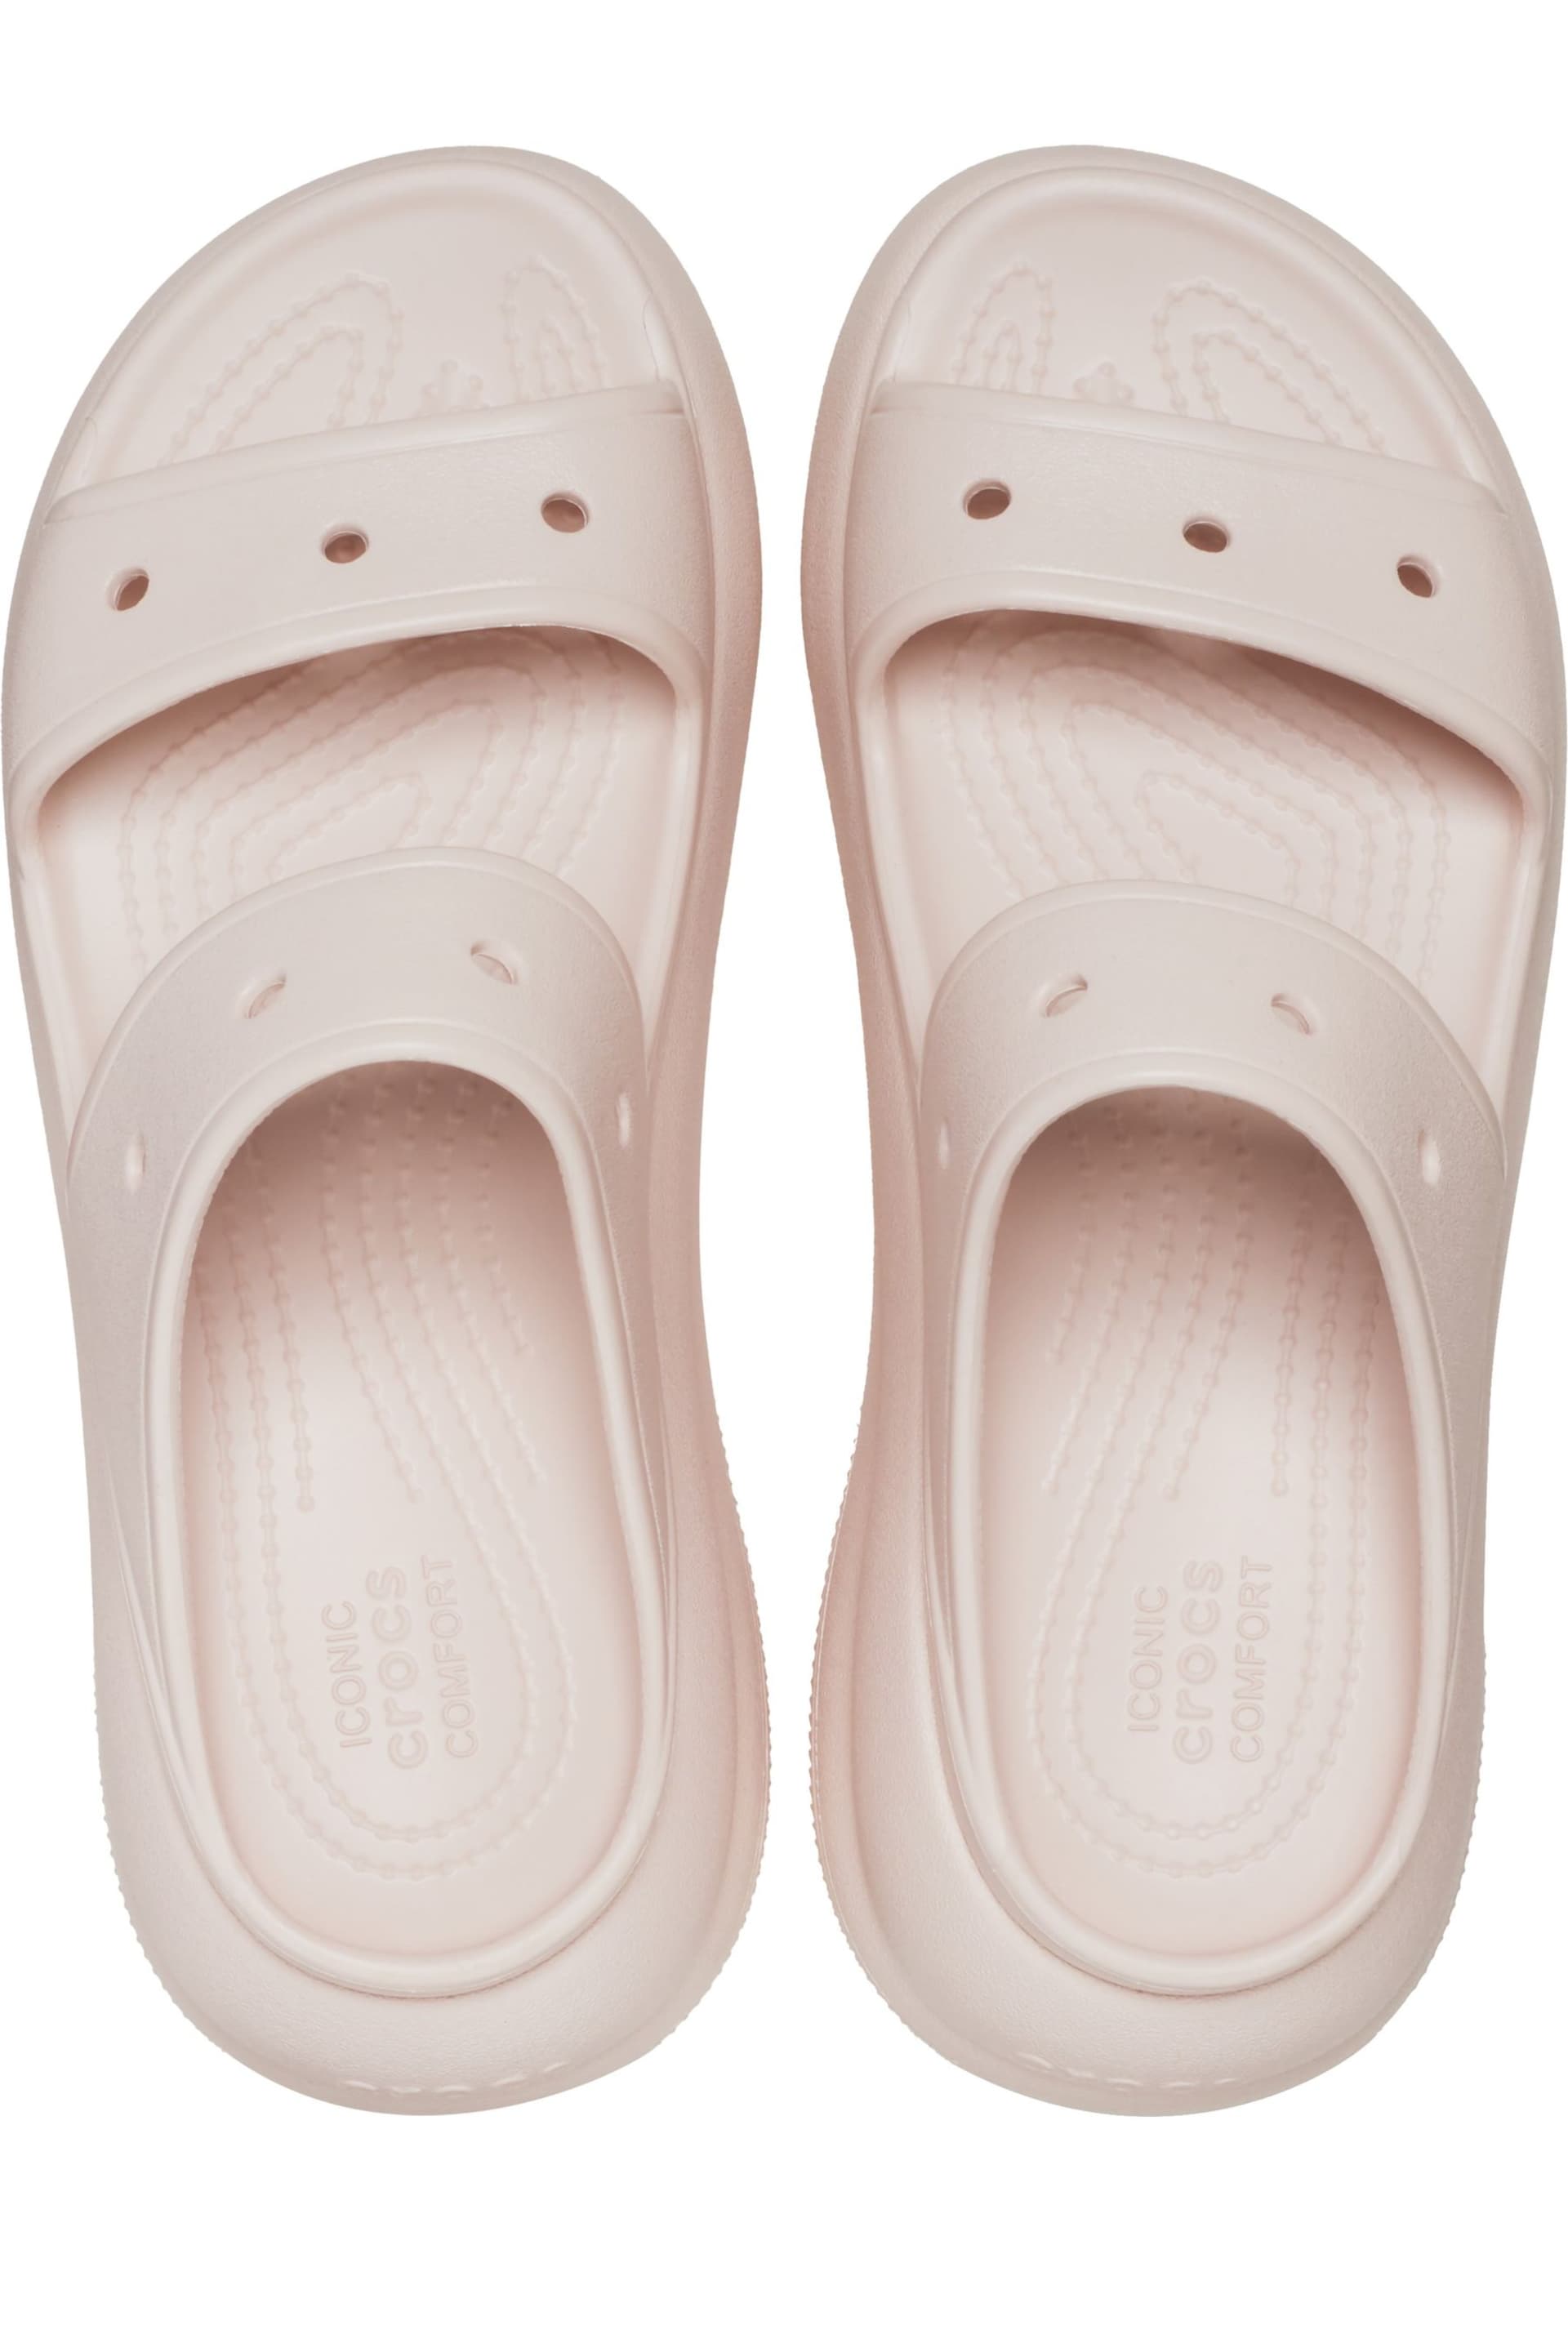 Crocs Classic Crush Sandals - Image 4 of 5